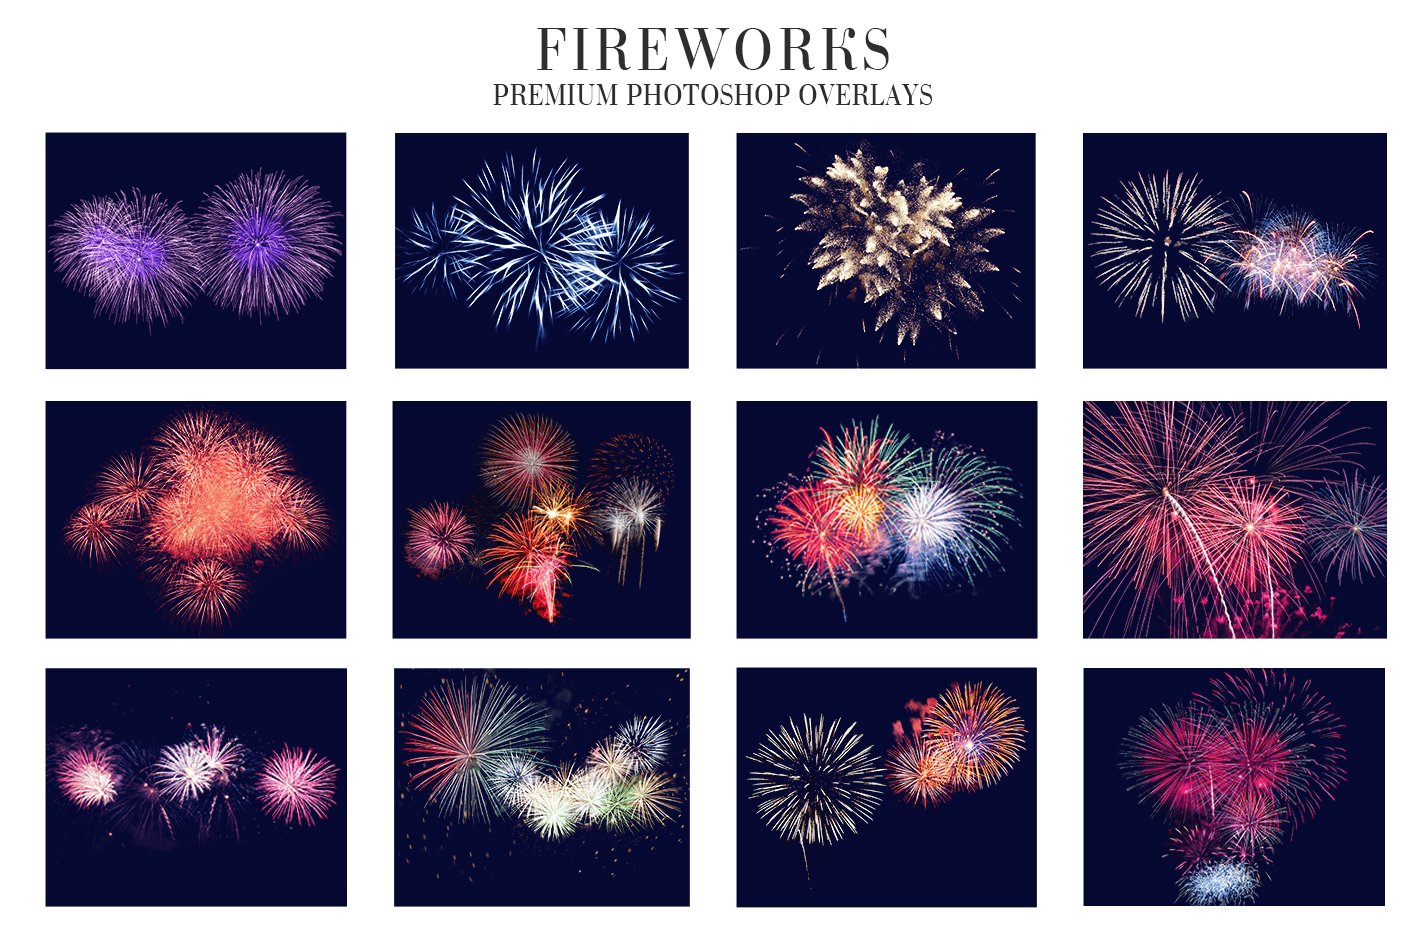 Fireworks Overlays Photoshoppreview image.